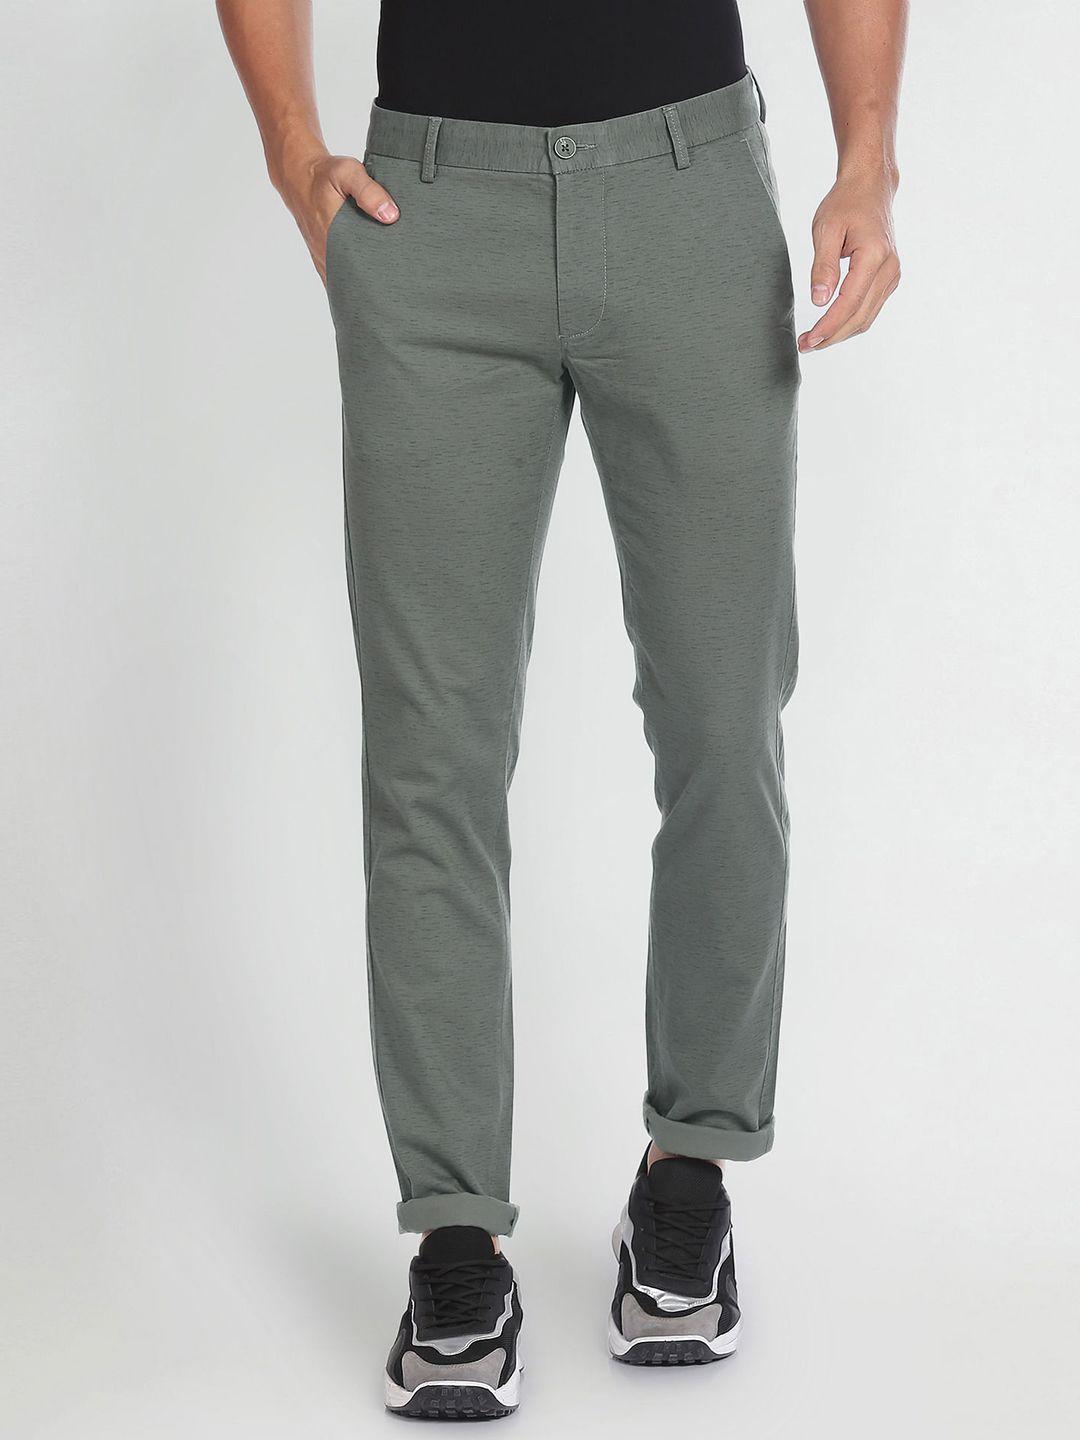 arrow sport men speckled detailed original slim fit low-rise casual trousers